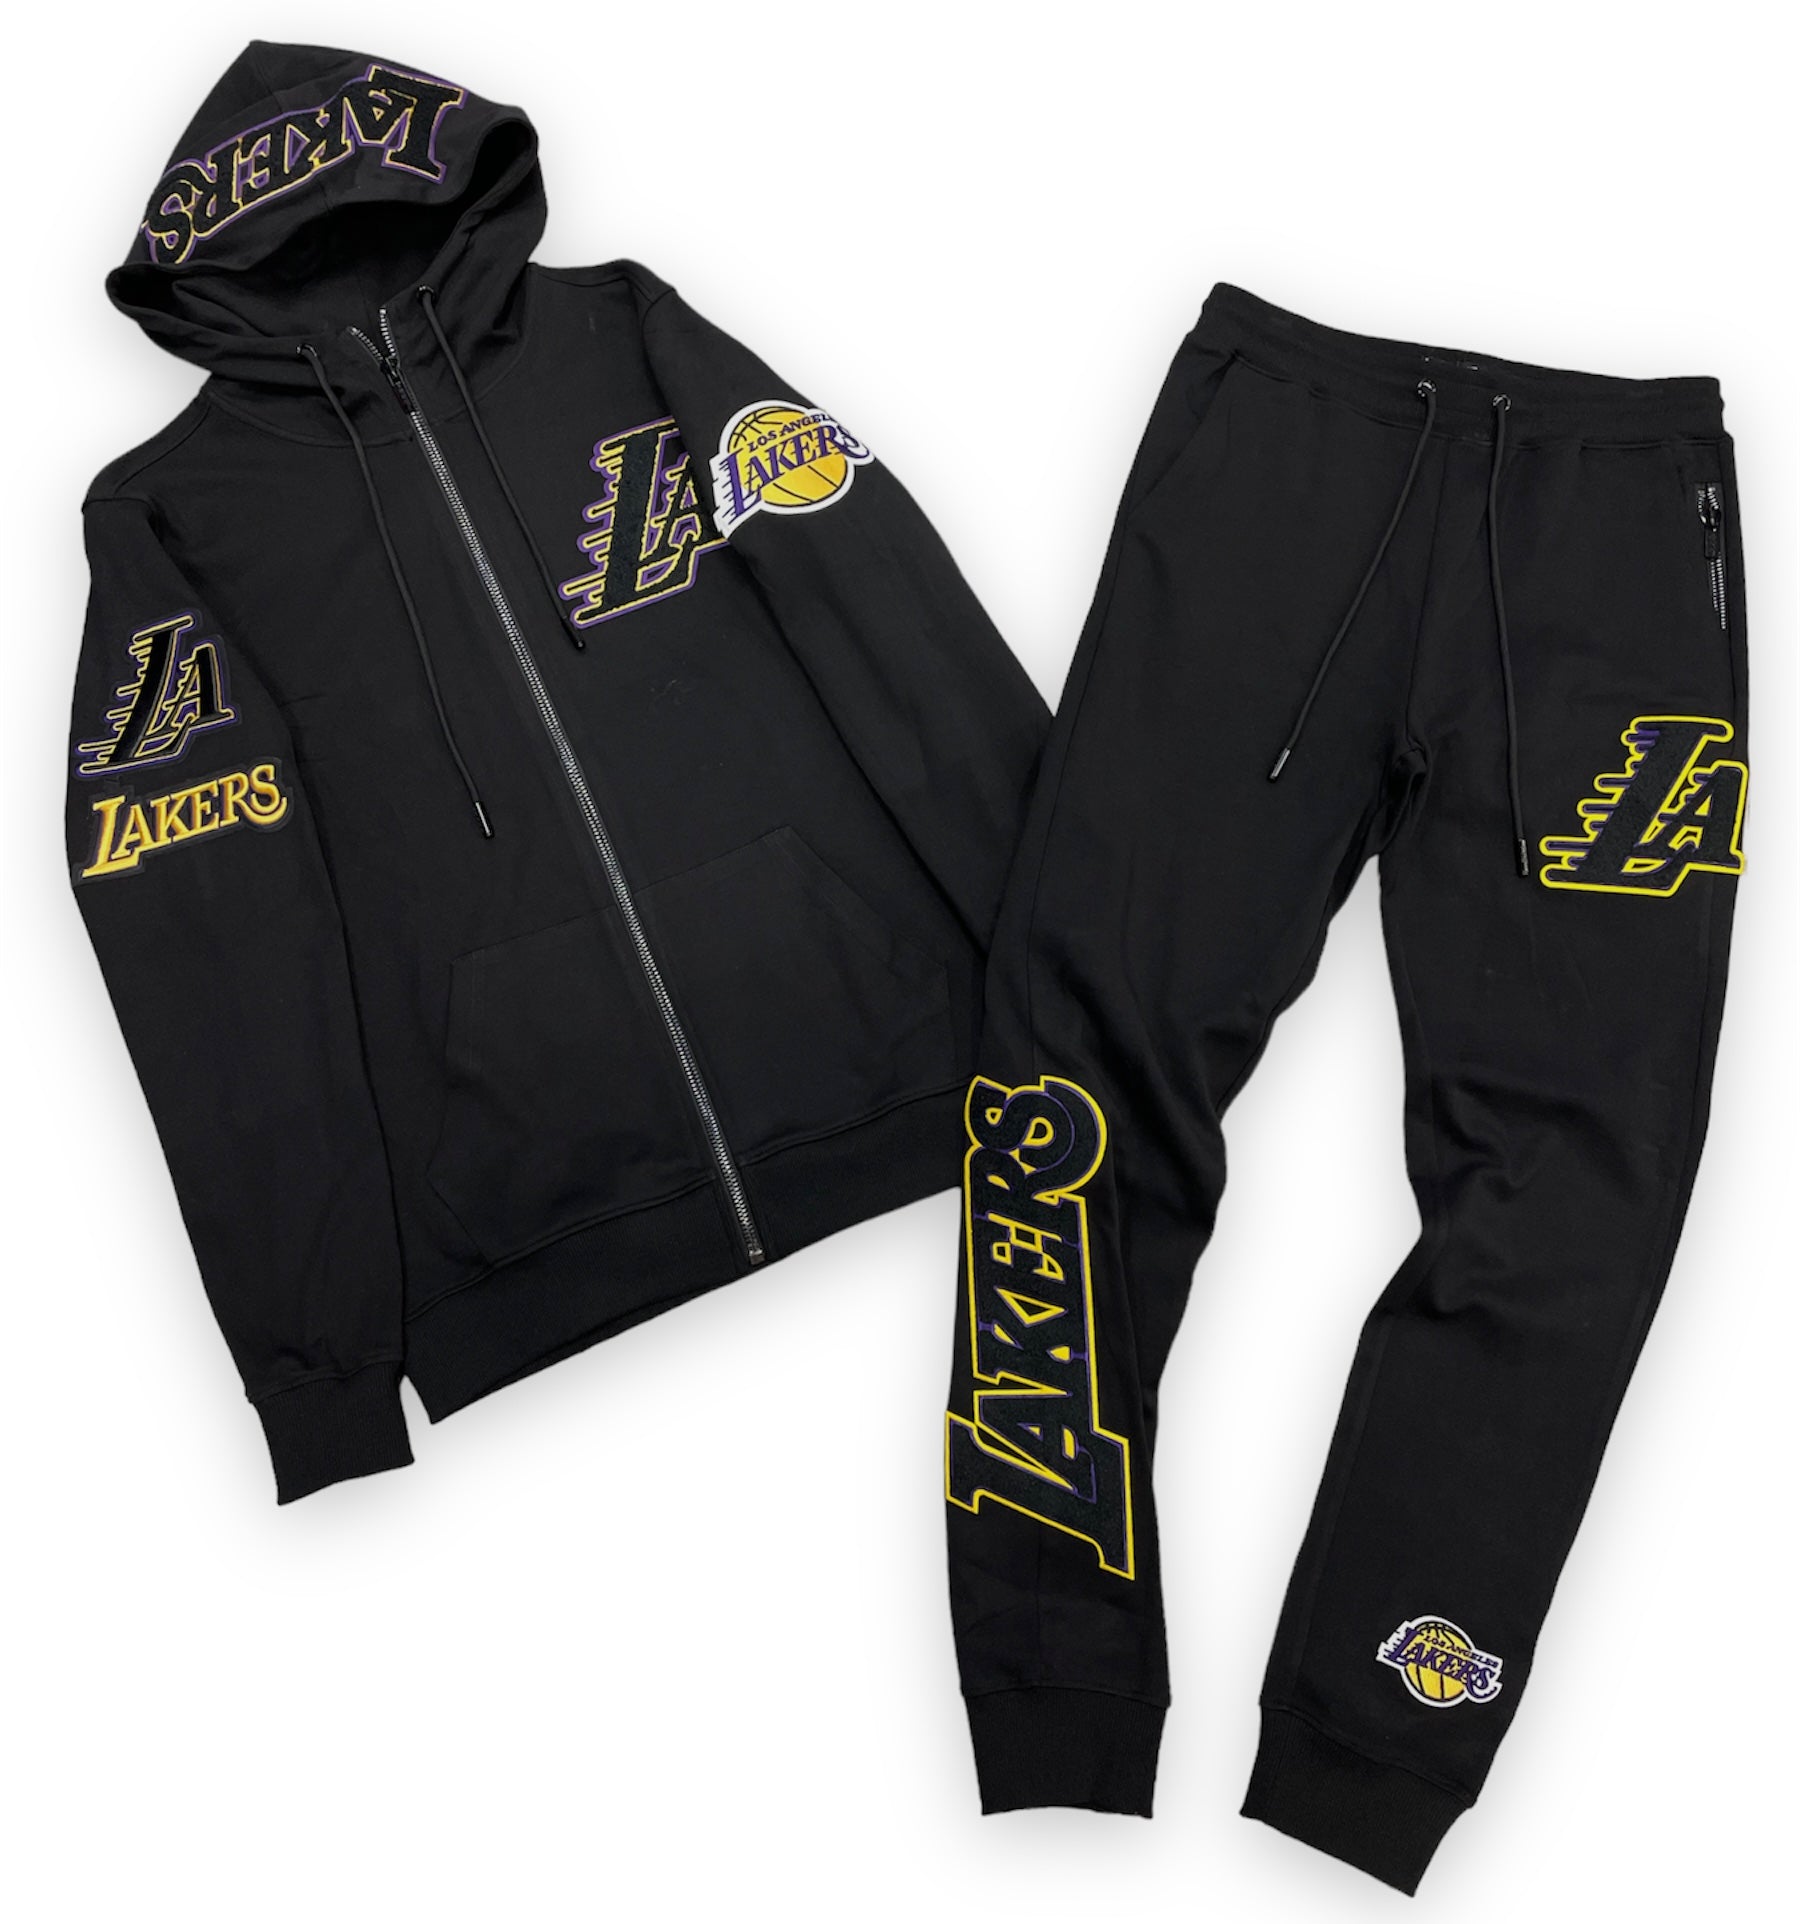 Las Angeles Lakers Men's Pro Standard Outfit